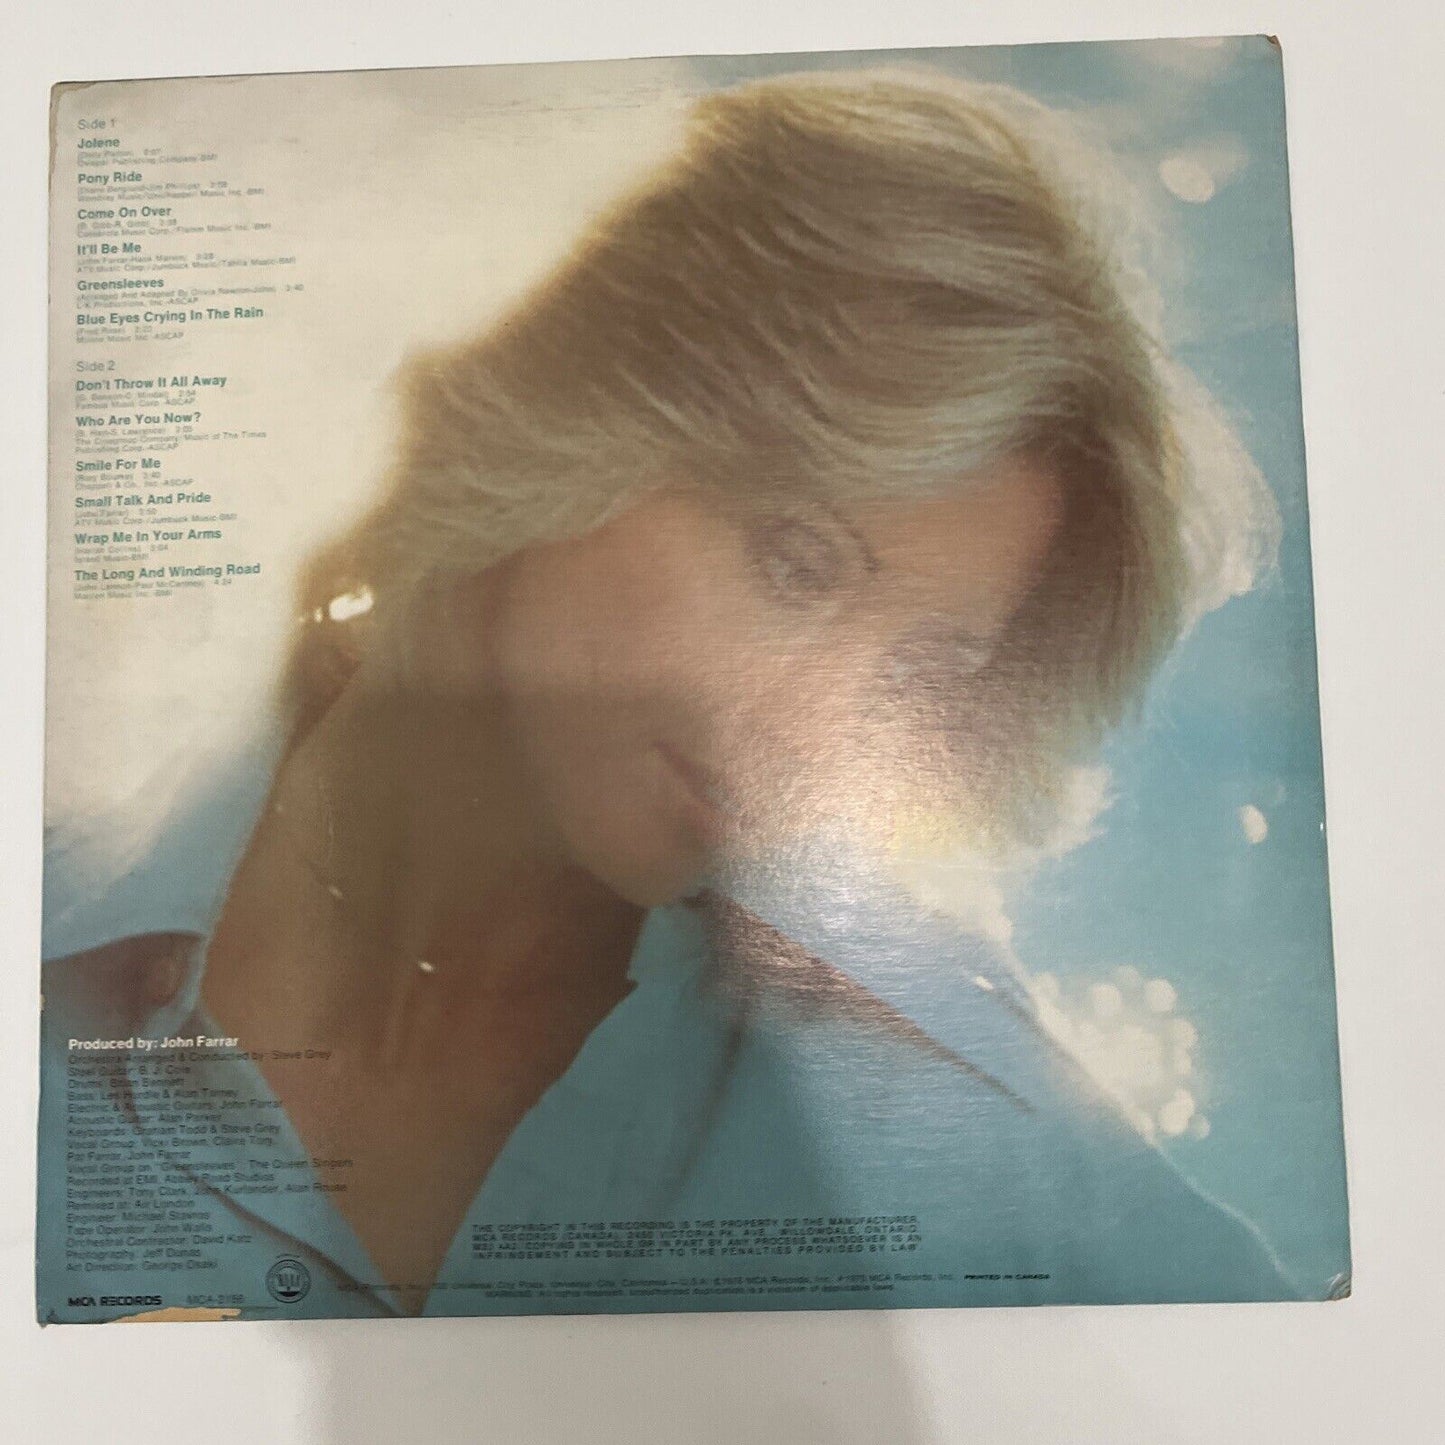 Olivia Newton John - Come on Over 1976 Vinyl Record LP